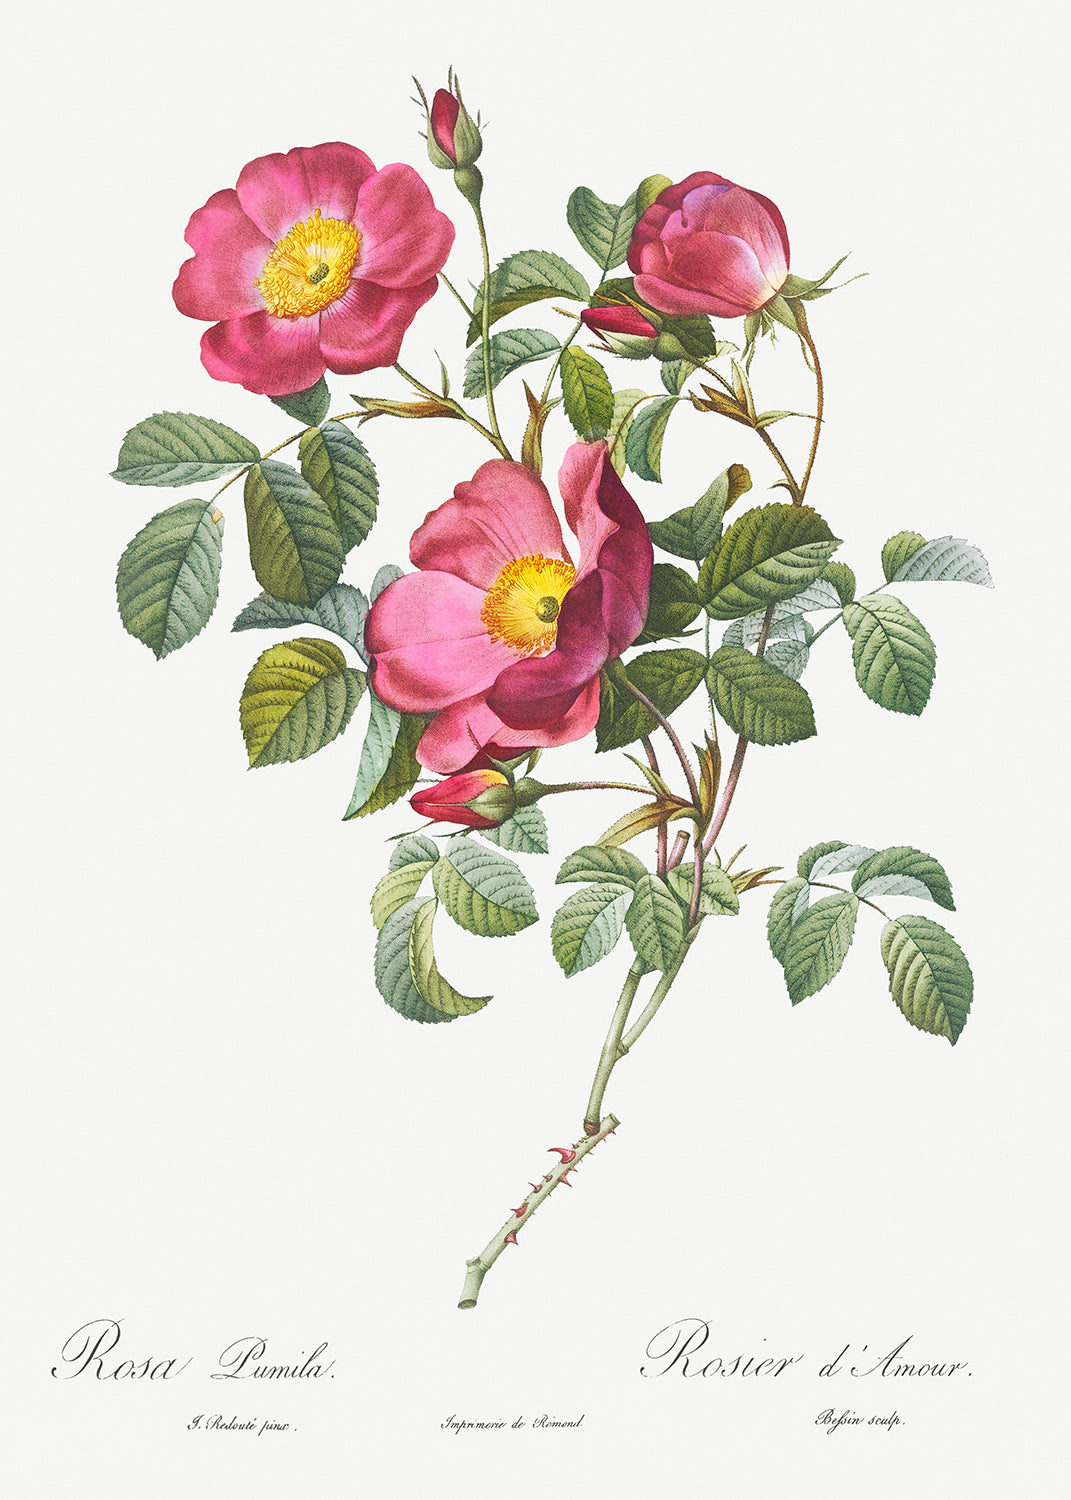 Botanical Plant Print - Rose of Love, Rosa pumila by Pierre Joseph Redoute